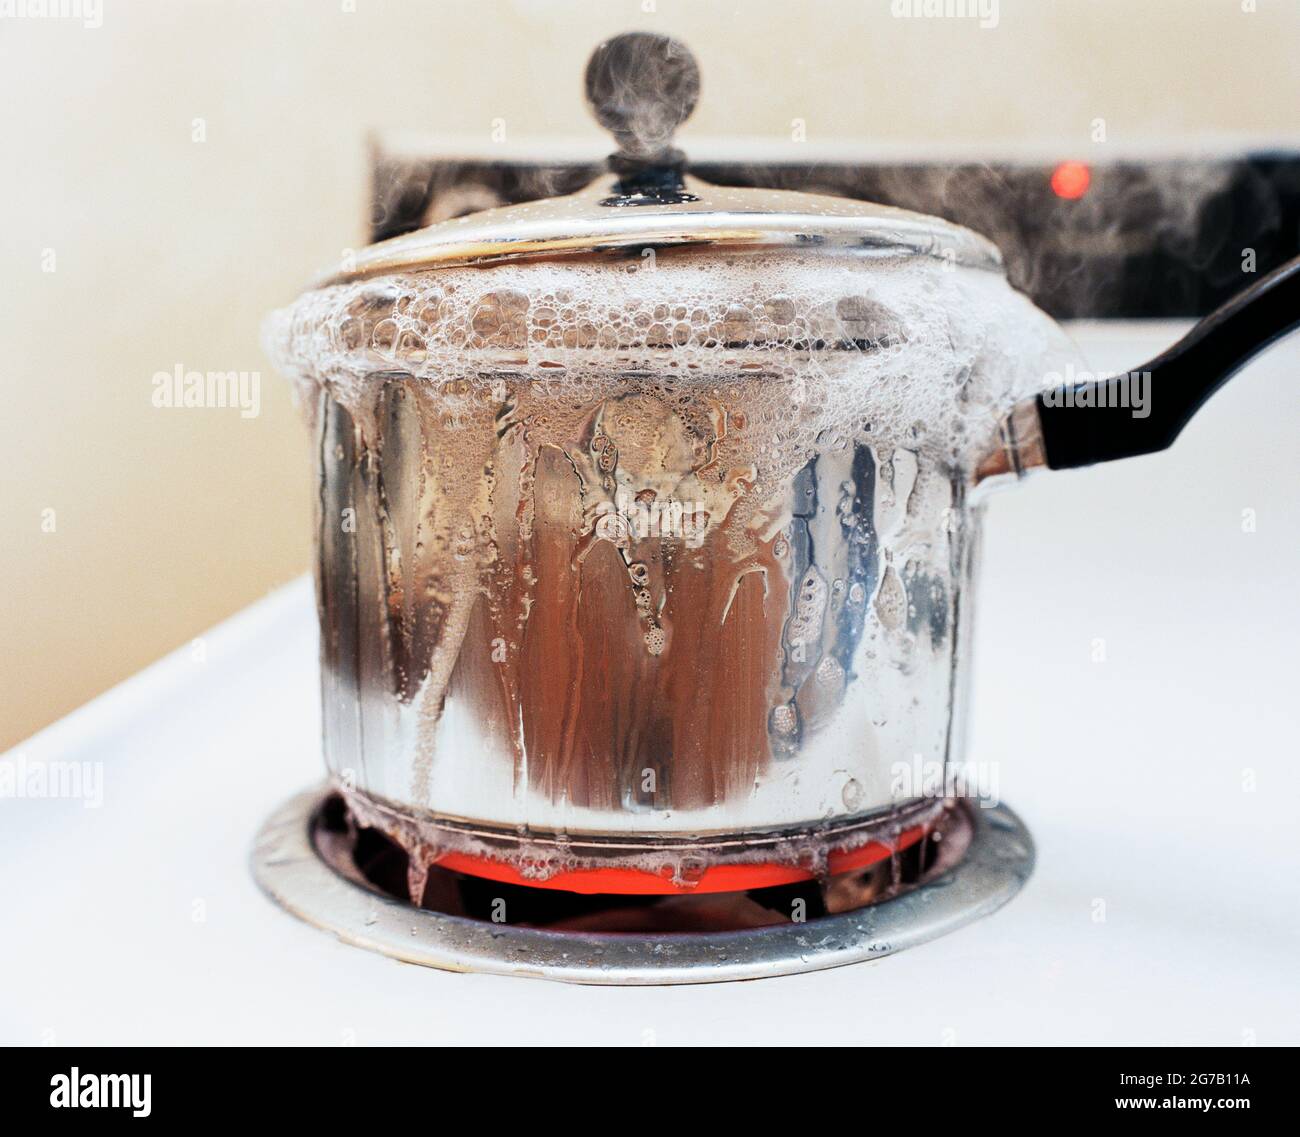 https://c8.alamy.com/comp/2G7B11A/a-pot-on-a-stove-top-boiling-over-2G7B11A.jpg